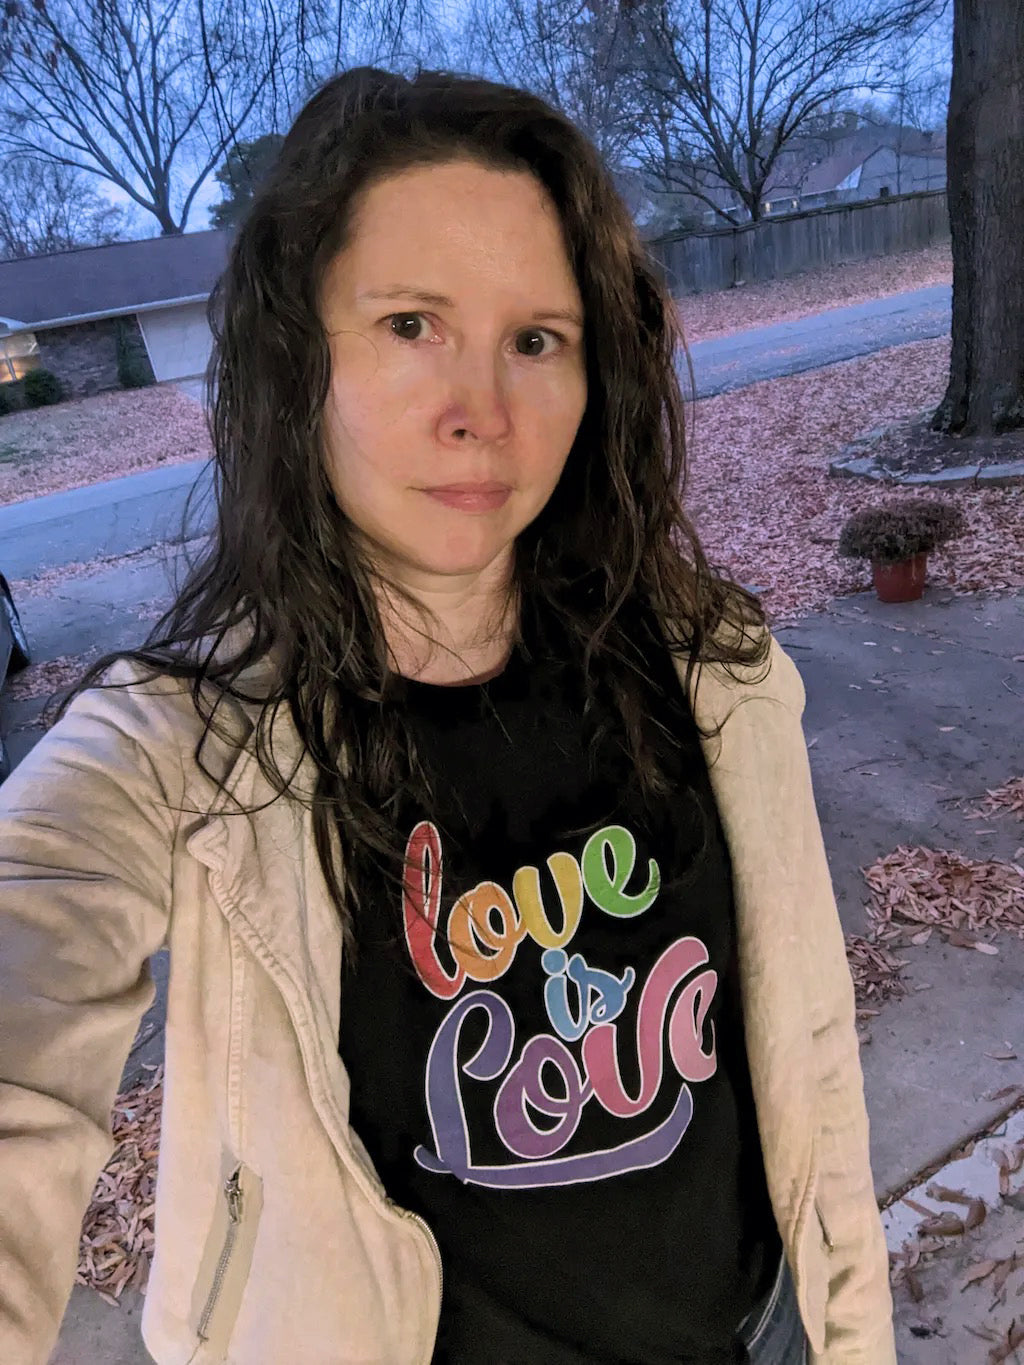 Love is Love Rainbow T-Shirt